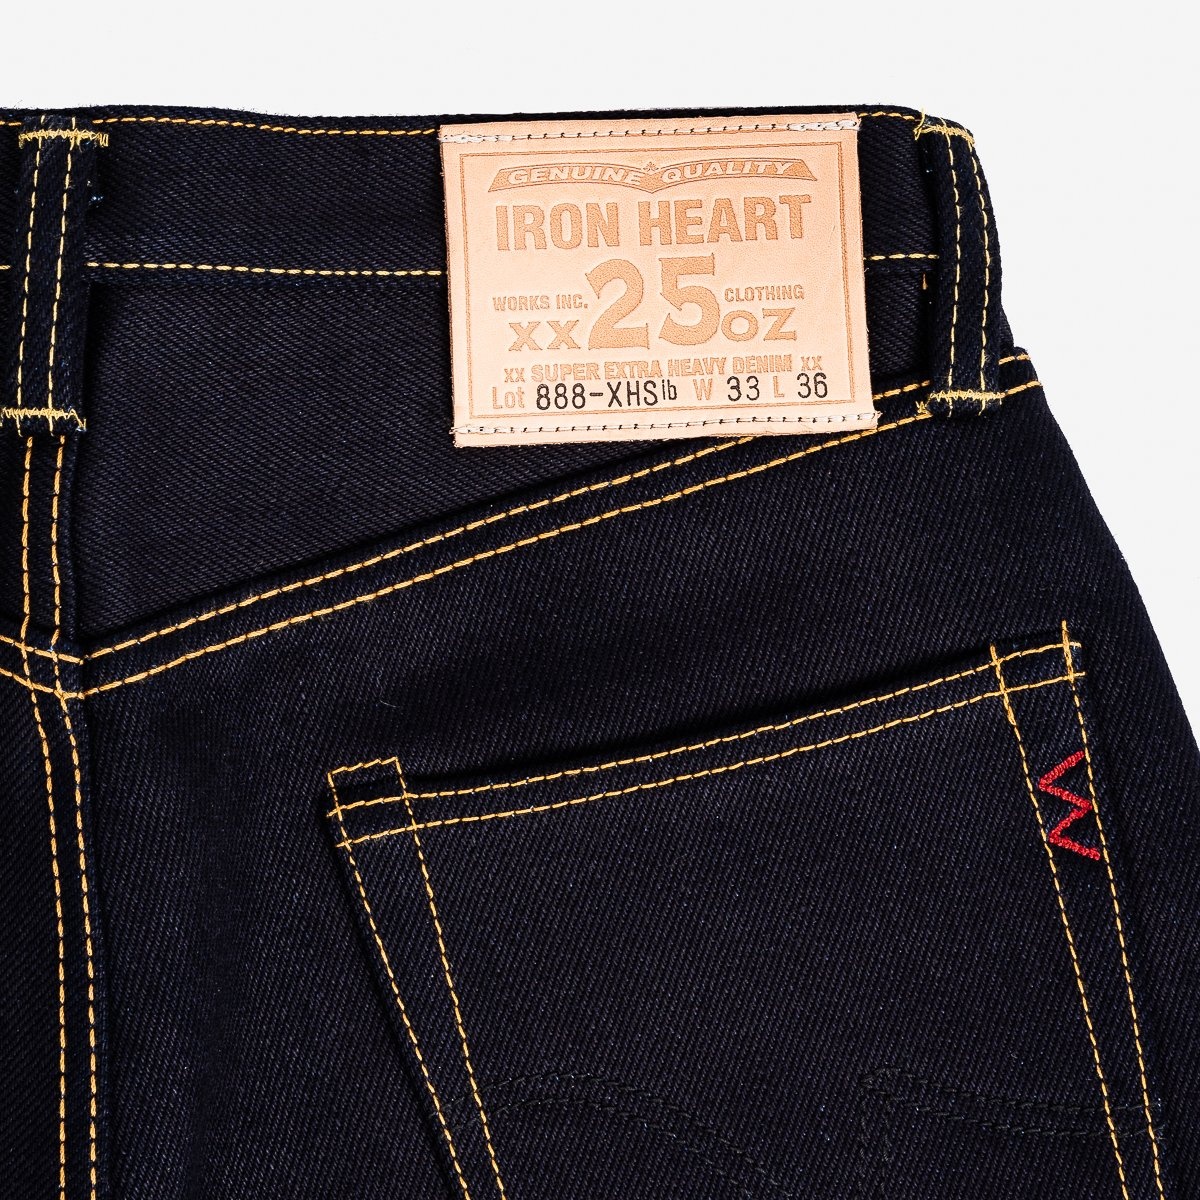 IH-888-XHSib 25oz Selvedge Denim Medium/High Rise Tapered Cut Jeans - Indigo/Black - 7